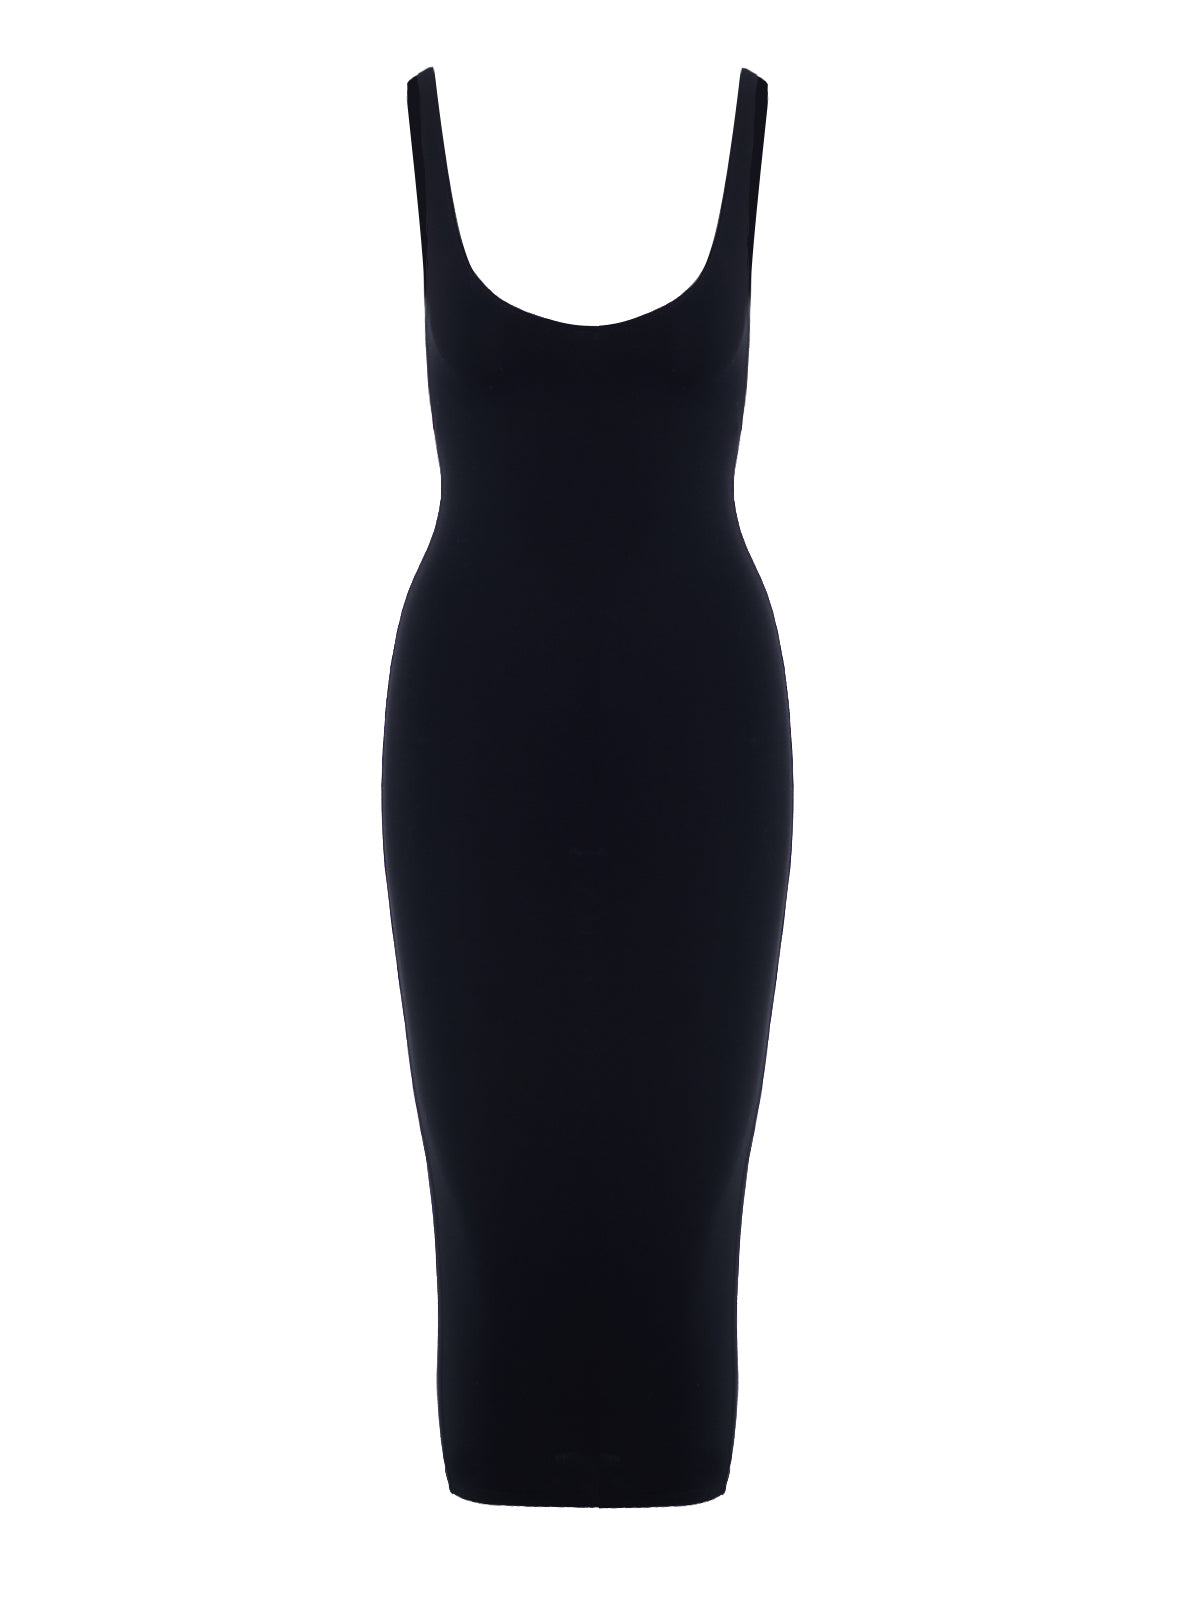 Naked Wardrobe mesh insert maxi dress in black